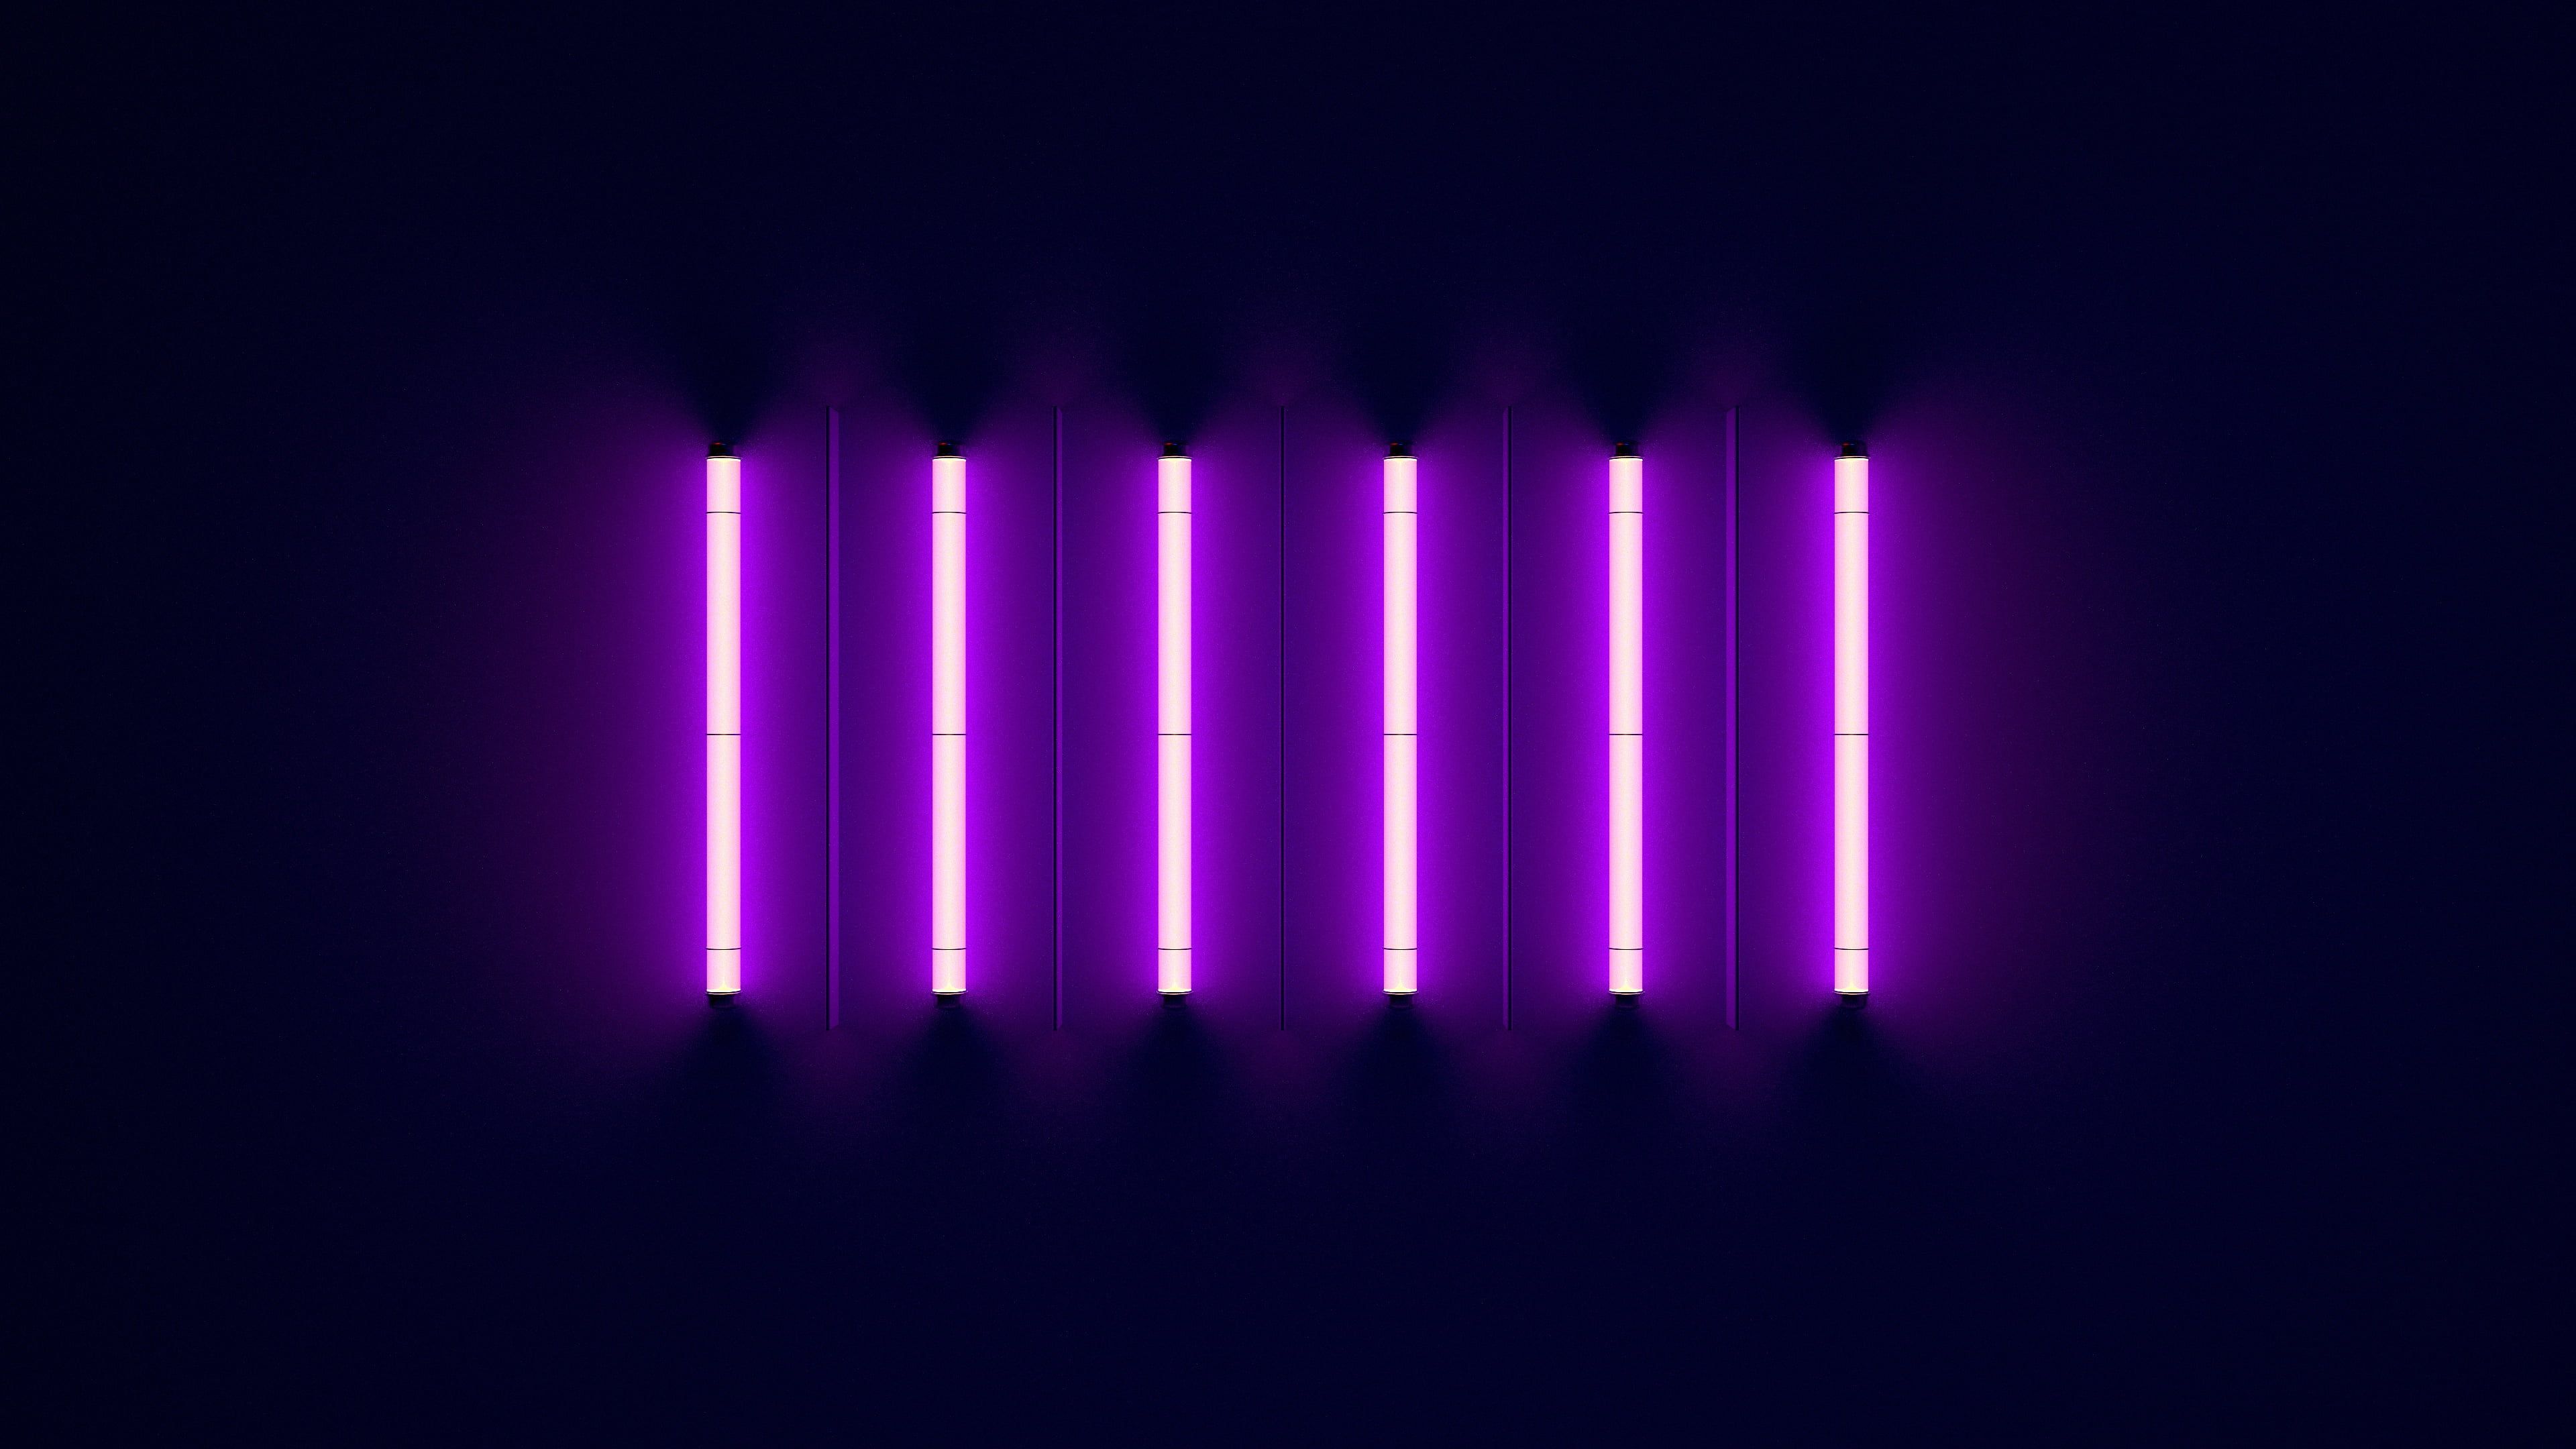 Light #Neon K #wallpaper #hdwallpaper #desktop